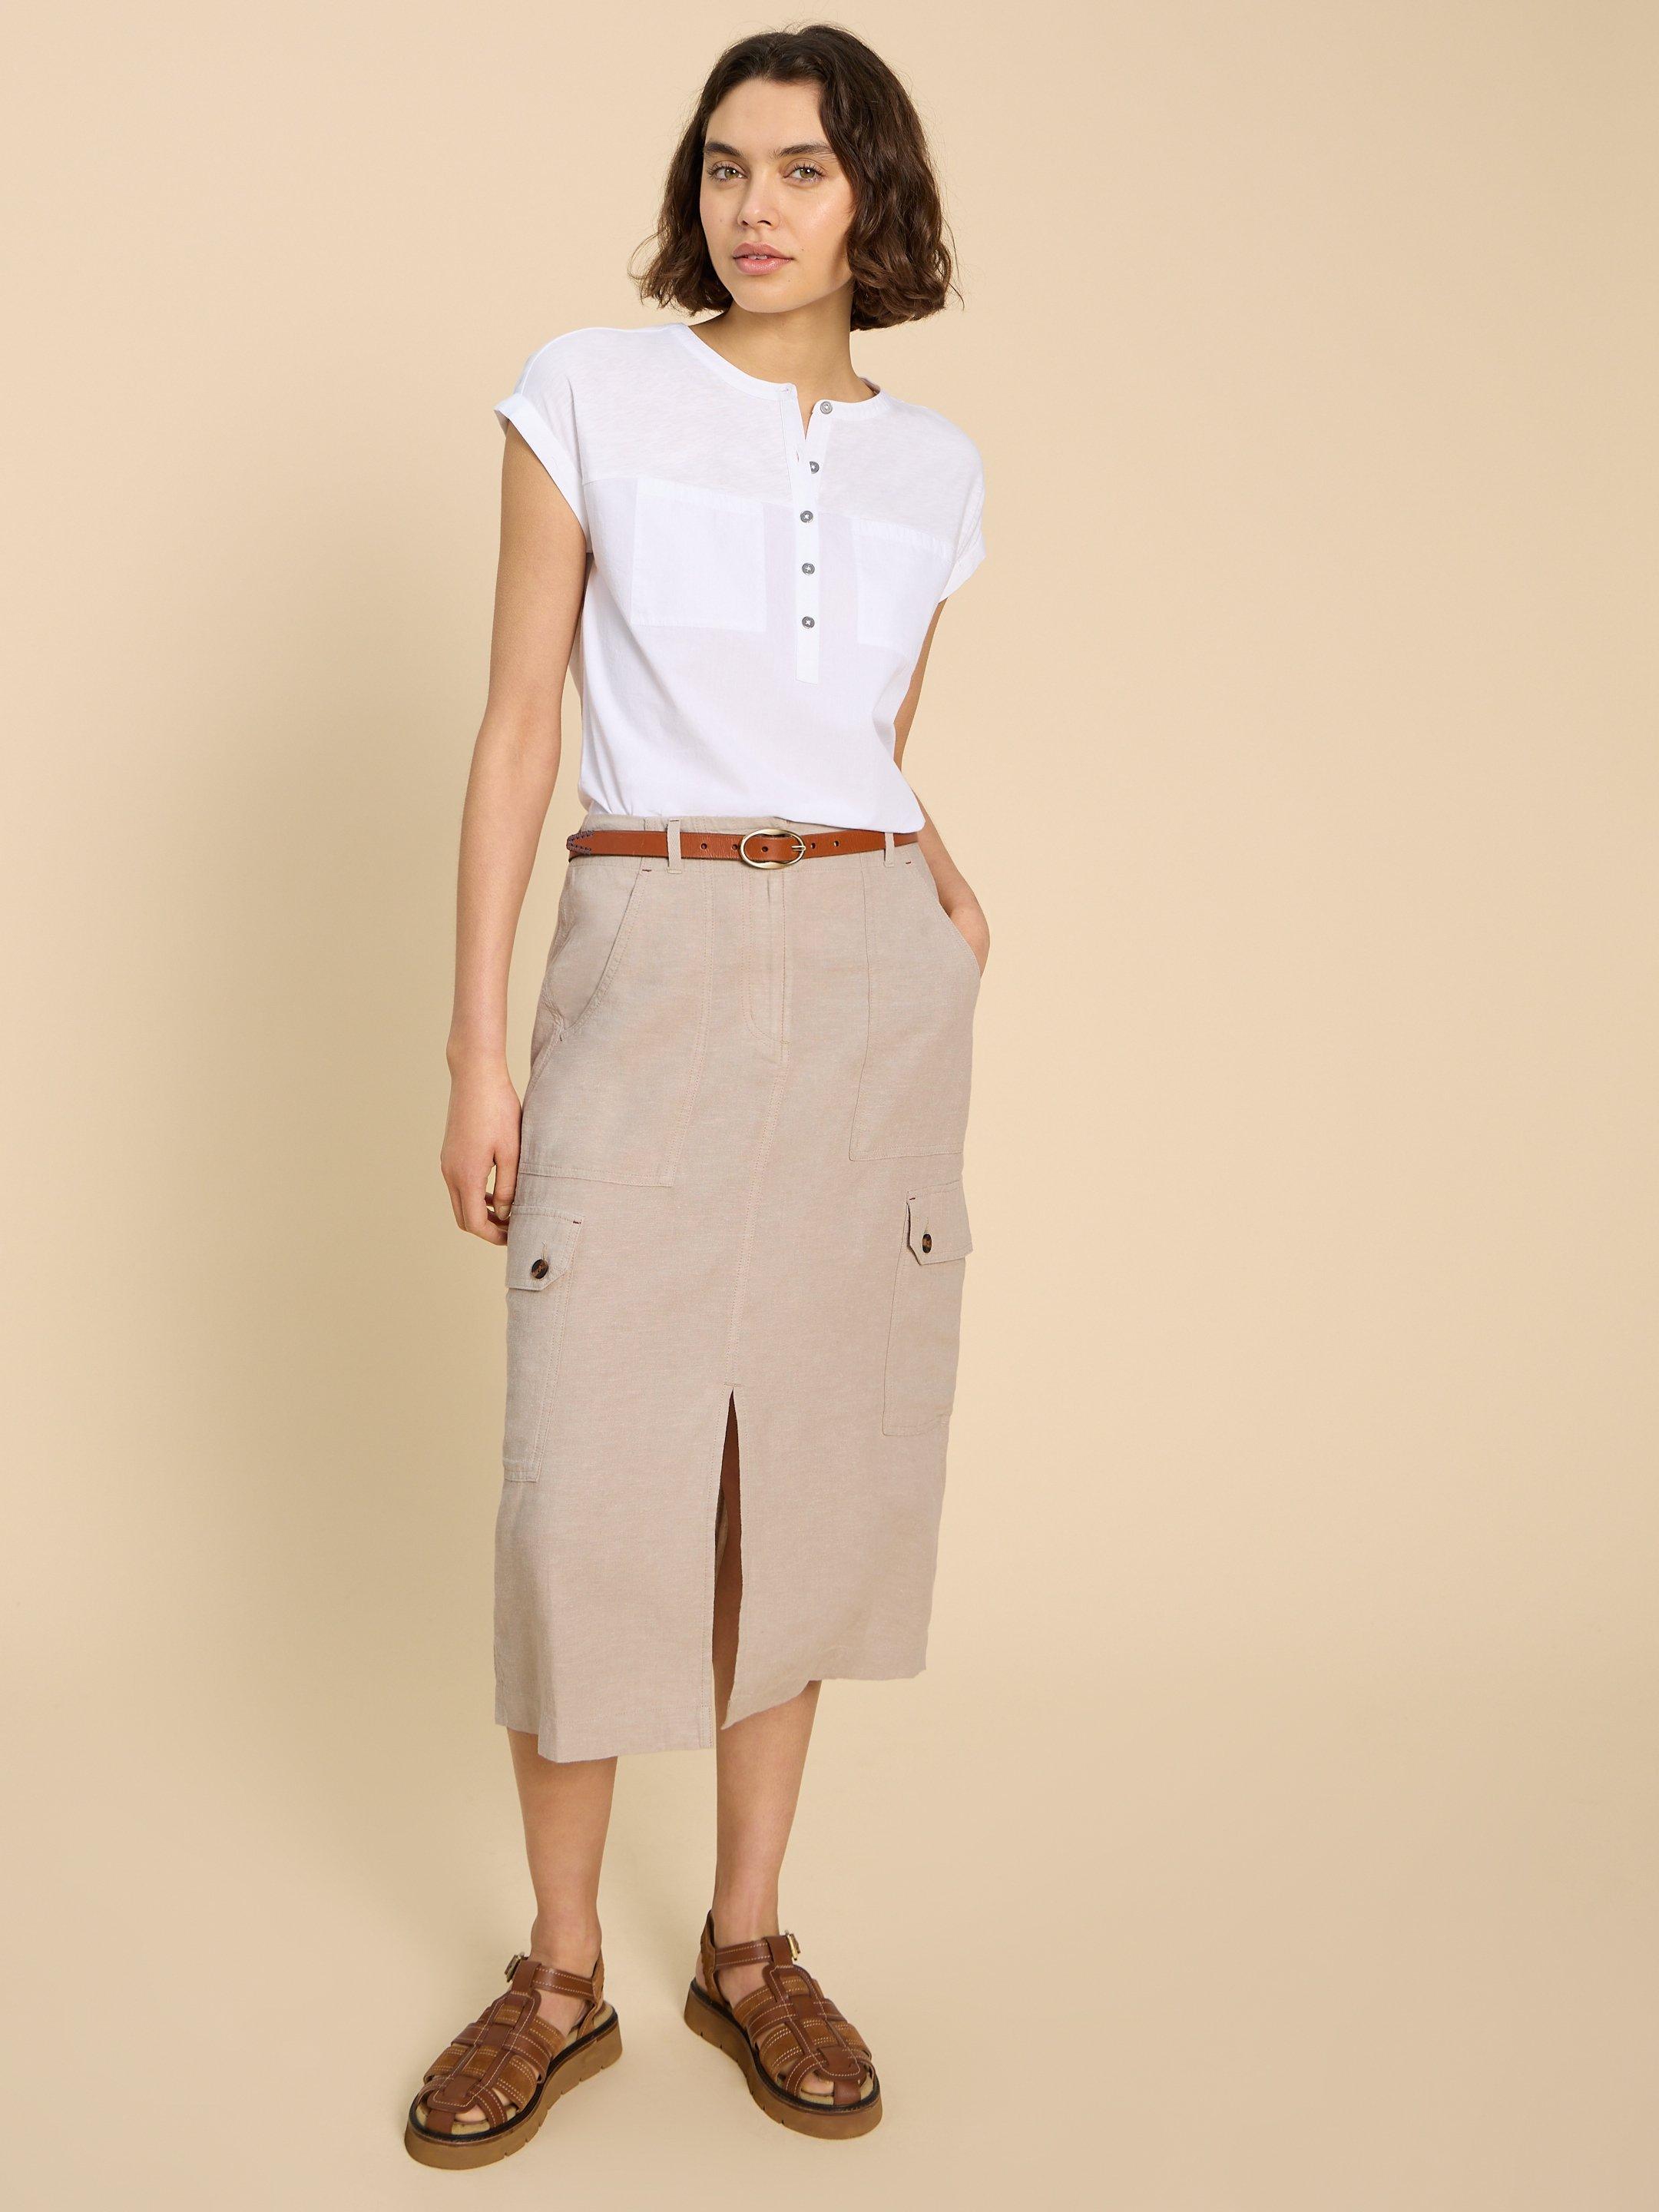 Arabella Linen Blend Skirt in LGT NAT - MODEL FRONT